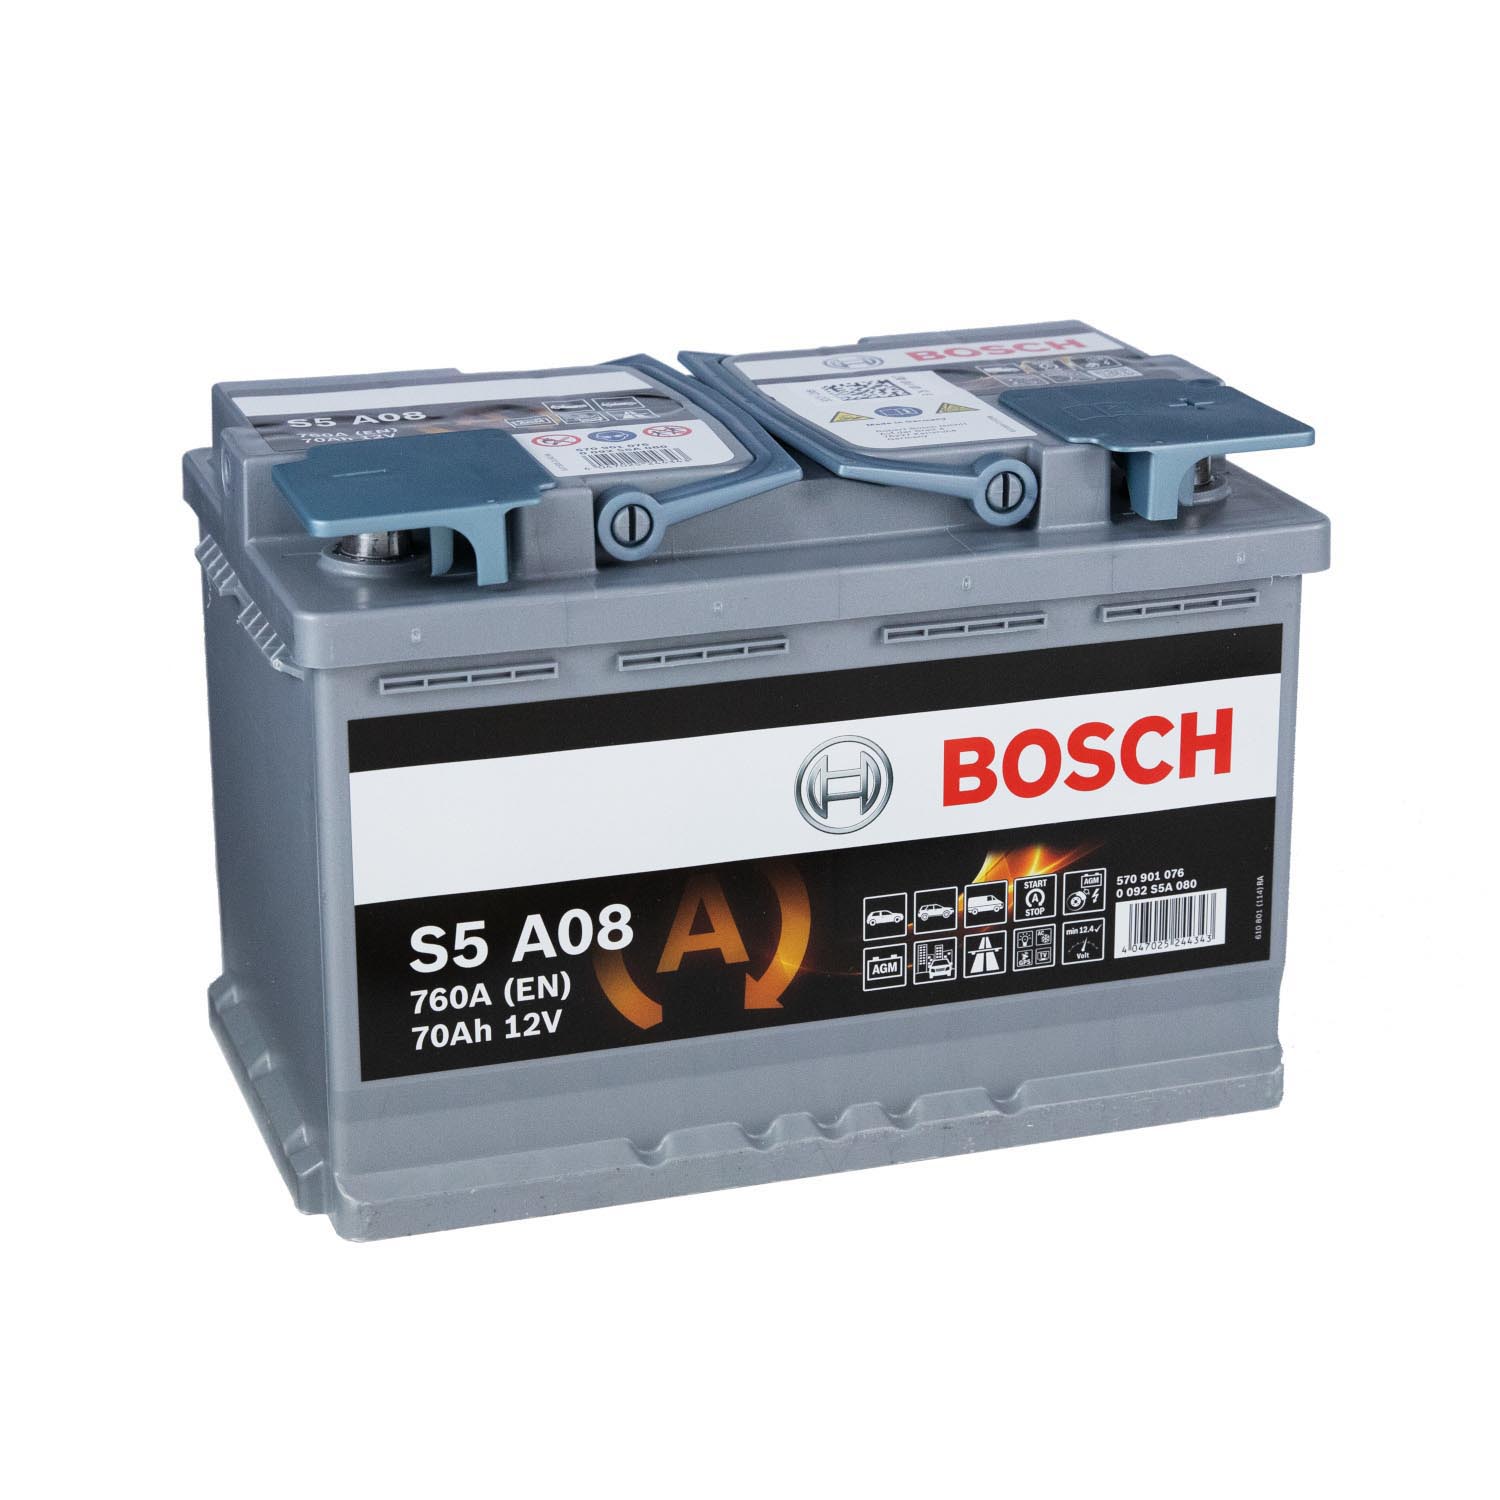 BOSCH batterie auto AGM 760A 70Ah